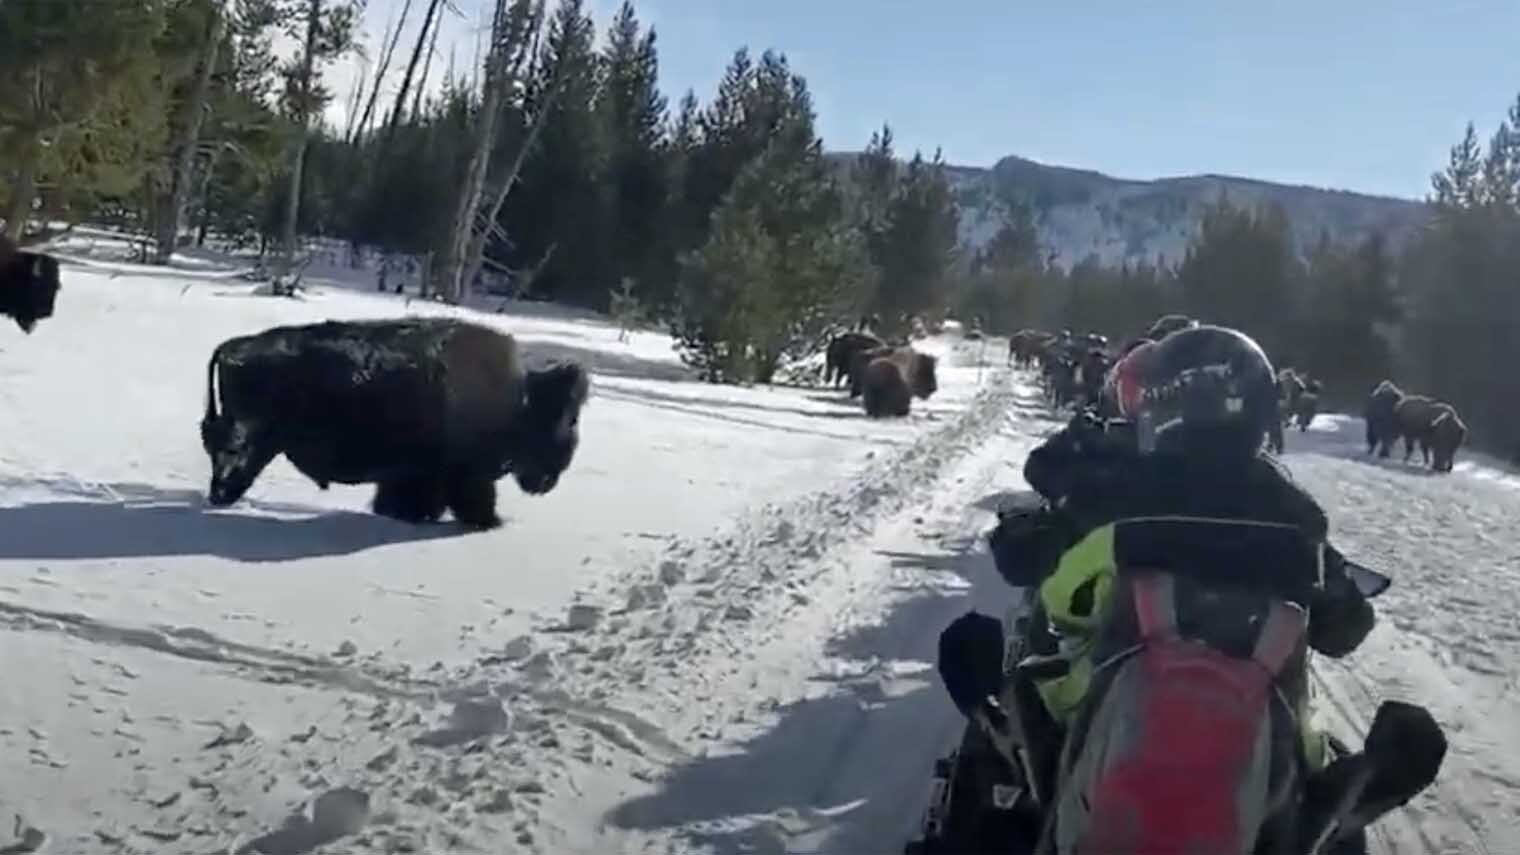 Bison snowmobile yellowstone